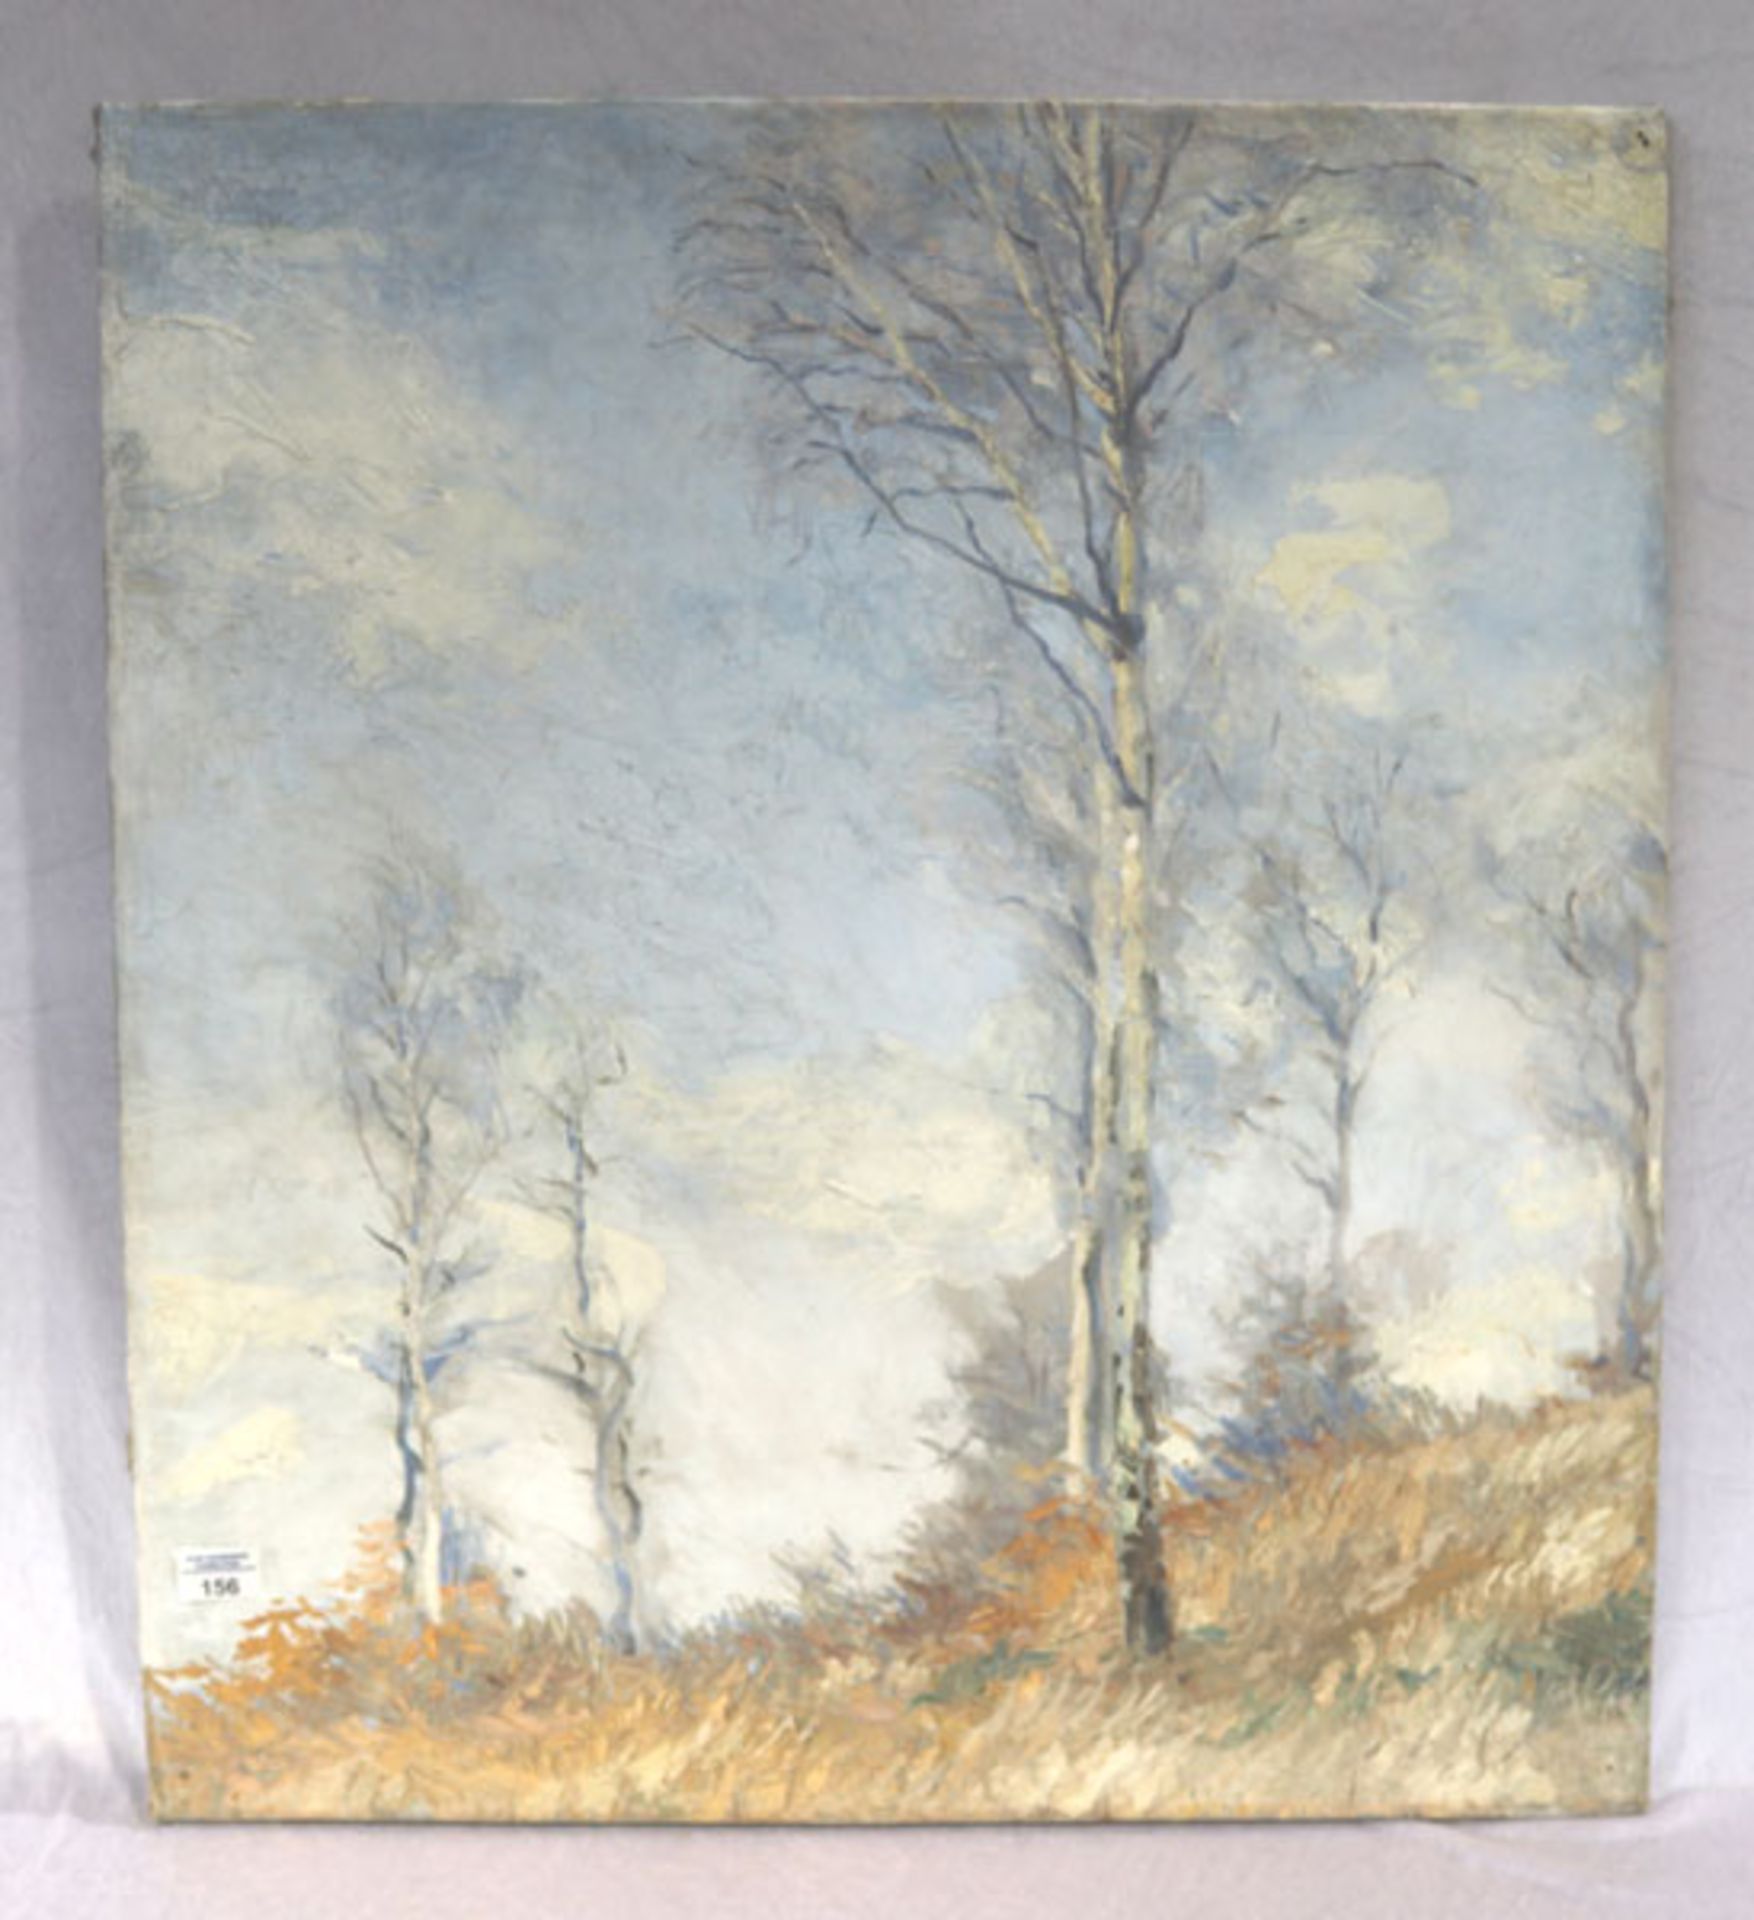 Gemälde ÖL/LW 'Landschafts-Szenerie mit Bäume', LW teils krakeliert, ohne Rahmen 79 cm x 70 cm (